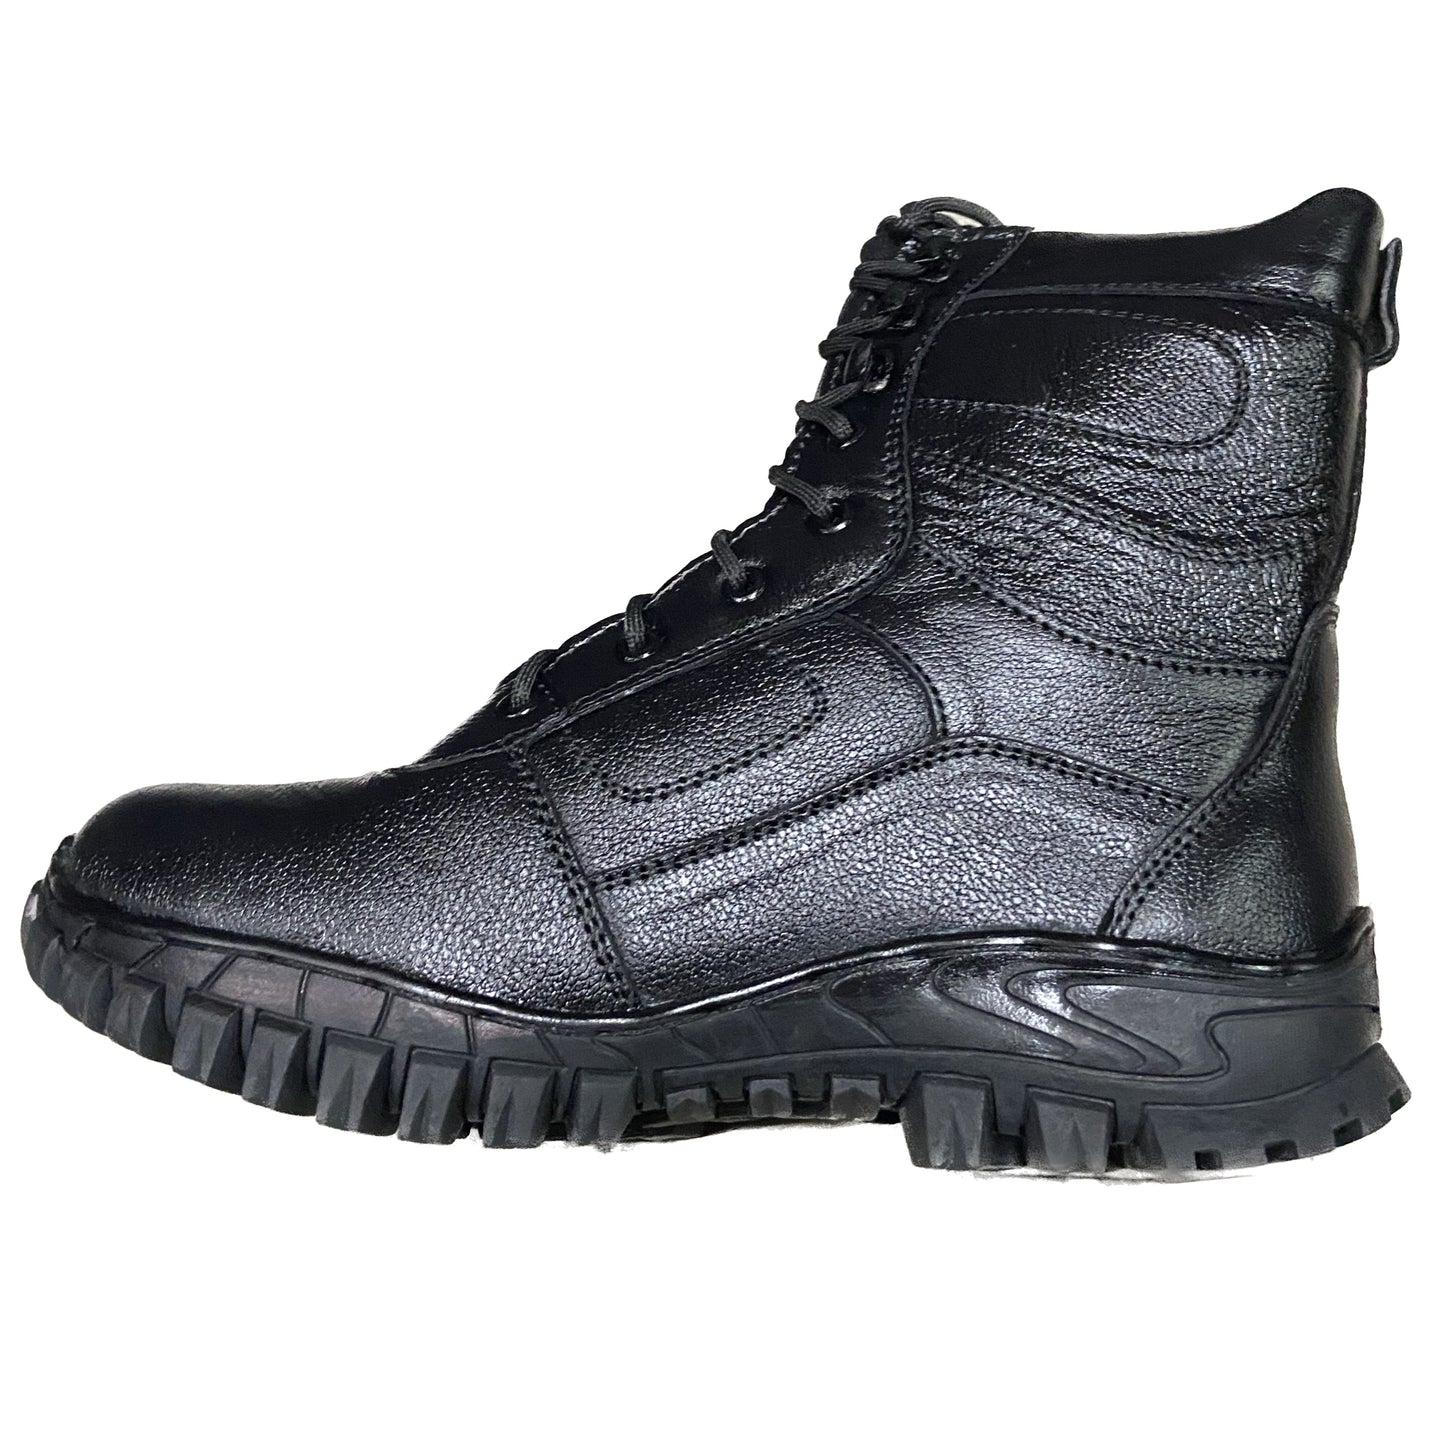 MEC GEAR Men's Black Leather Tactical Combat Army Boot